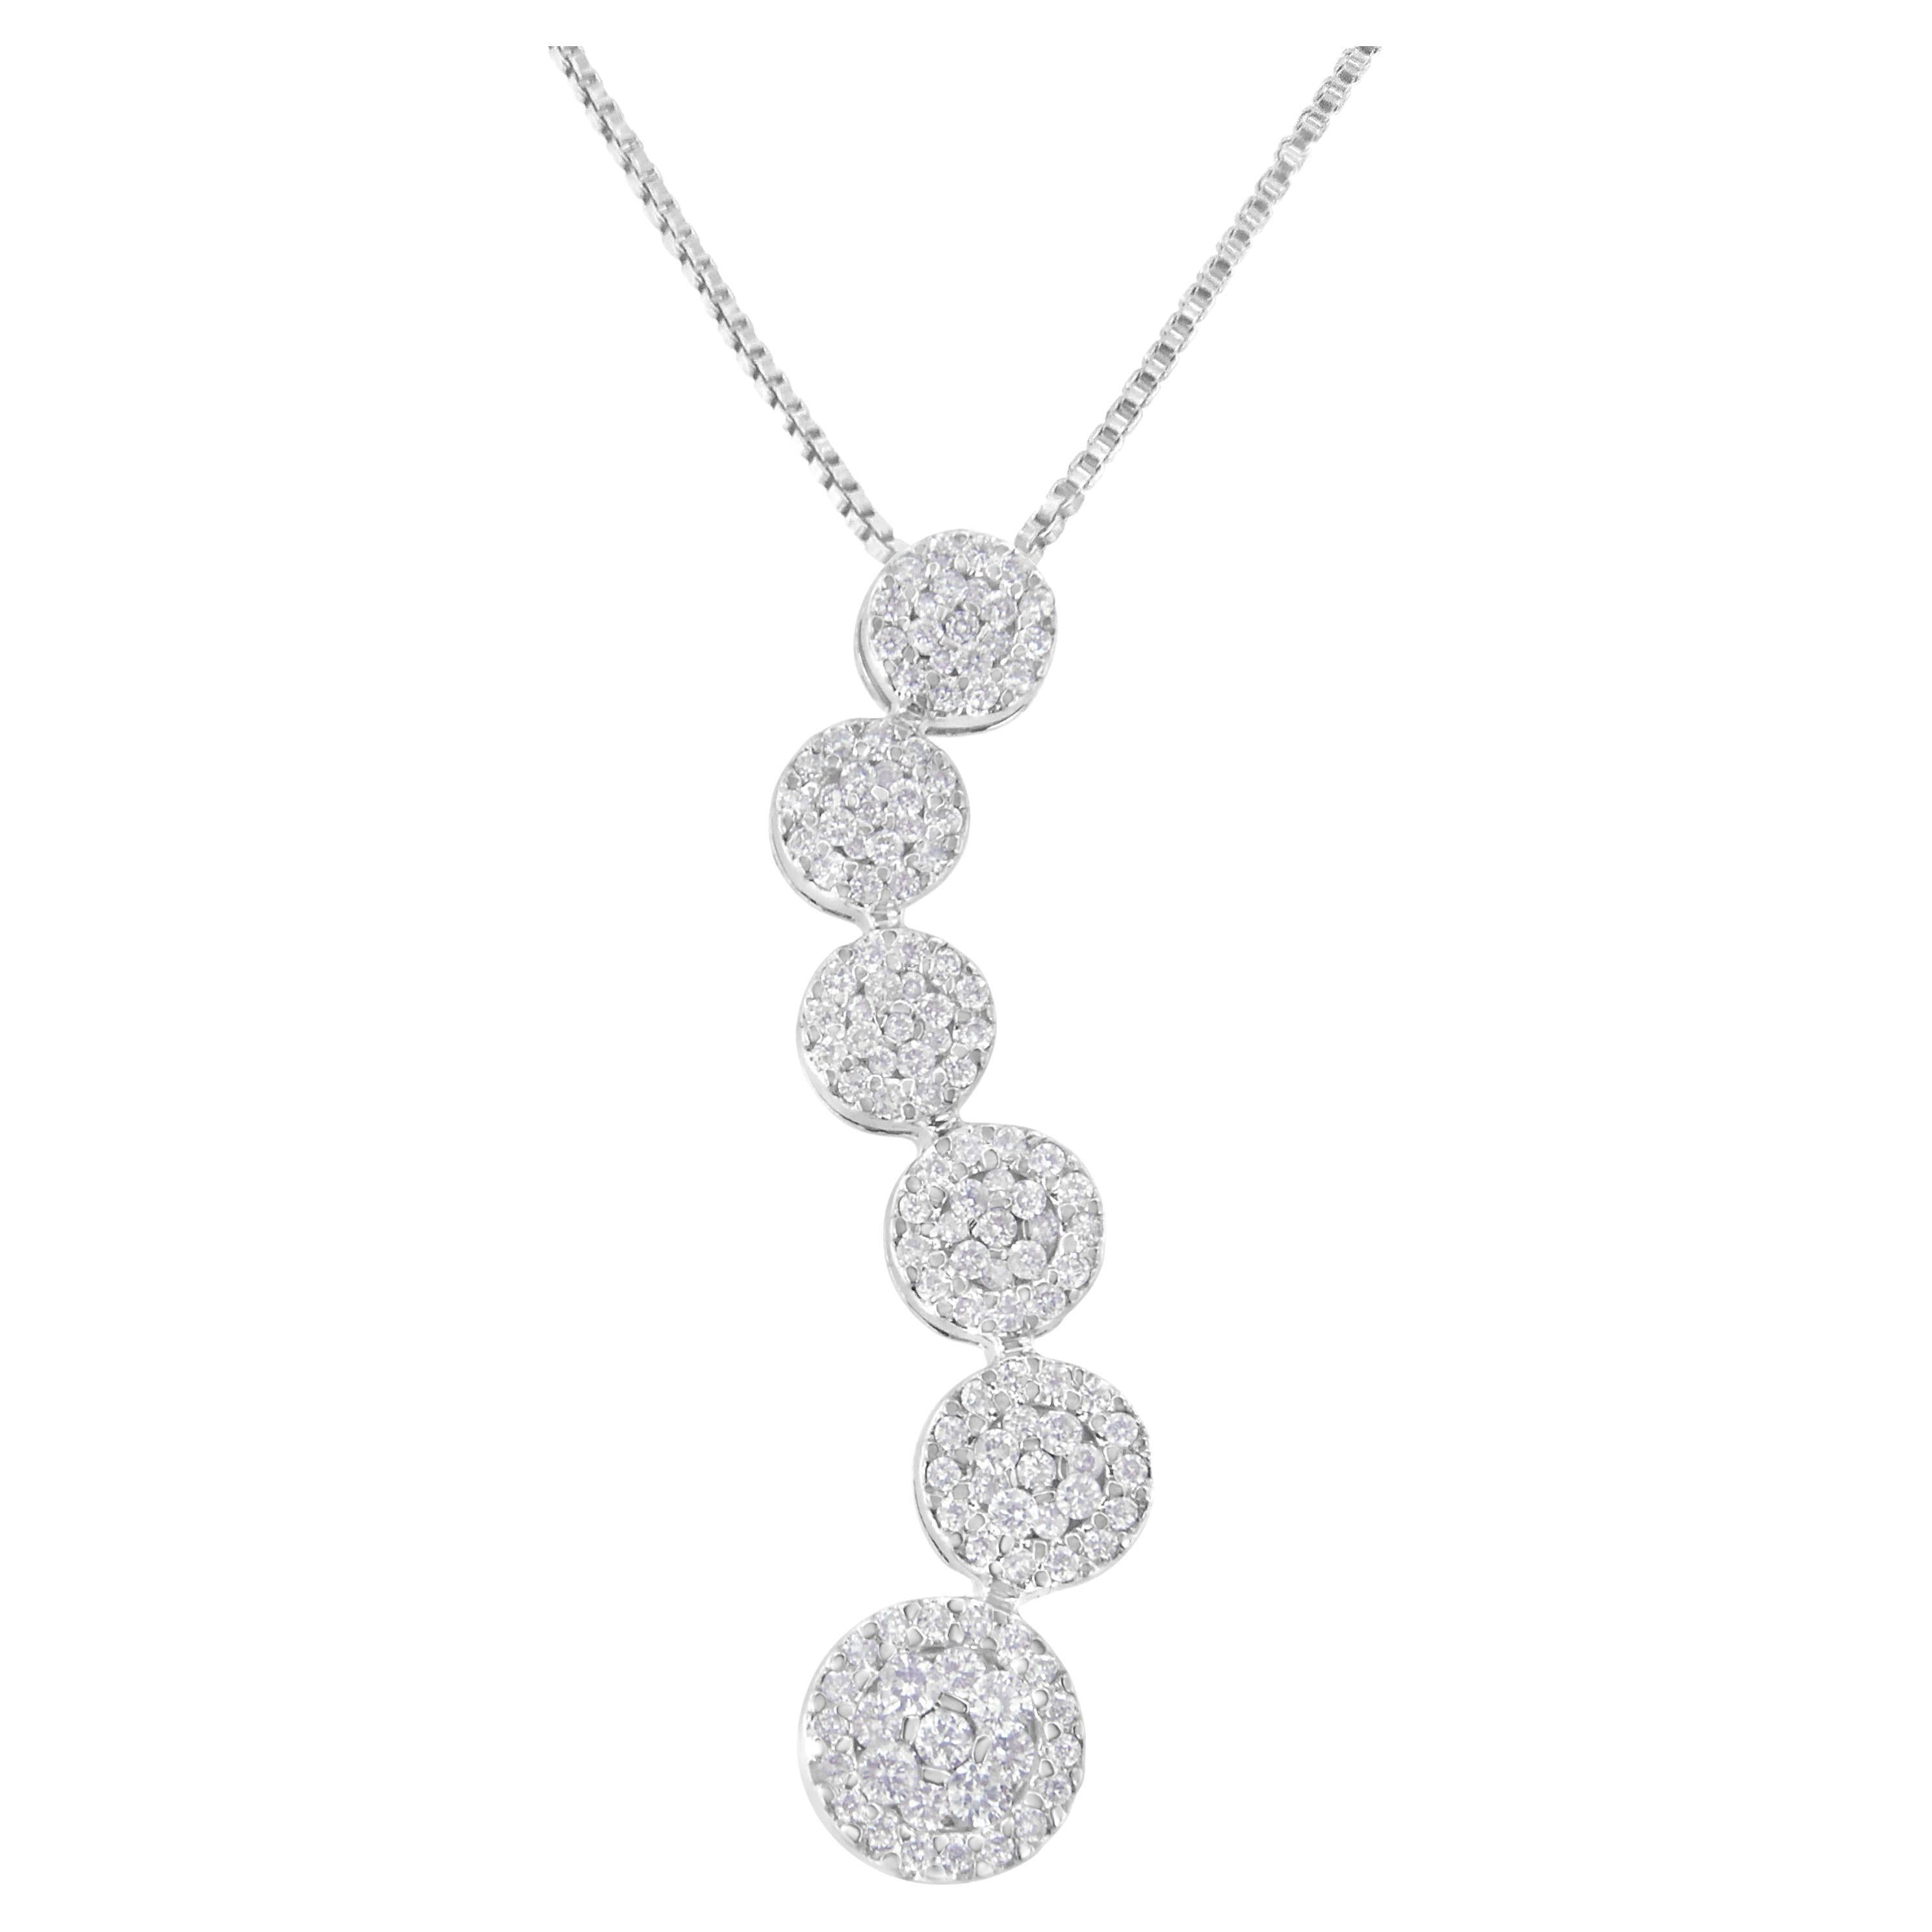 14K White Gold 1.0 Carat Diamond Cluster Journey Pendant Necklace